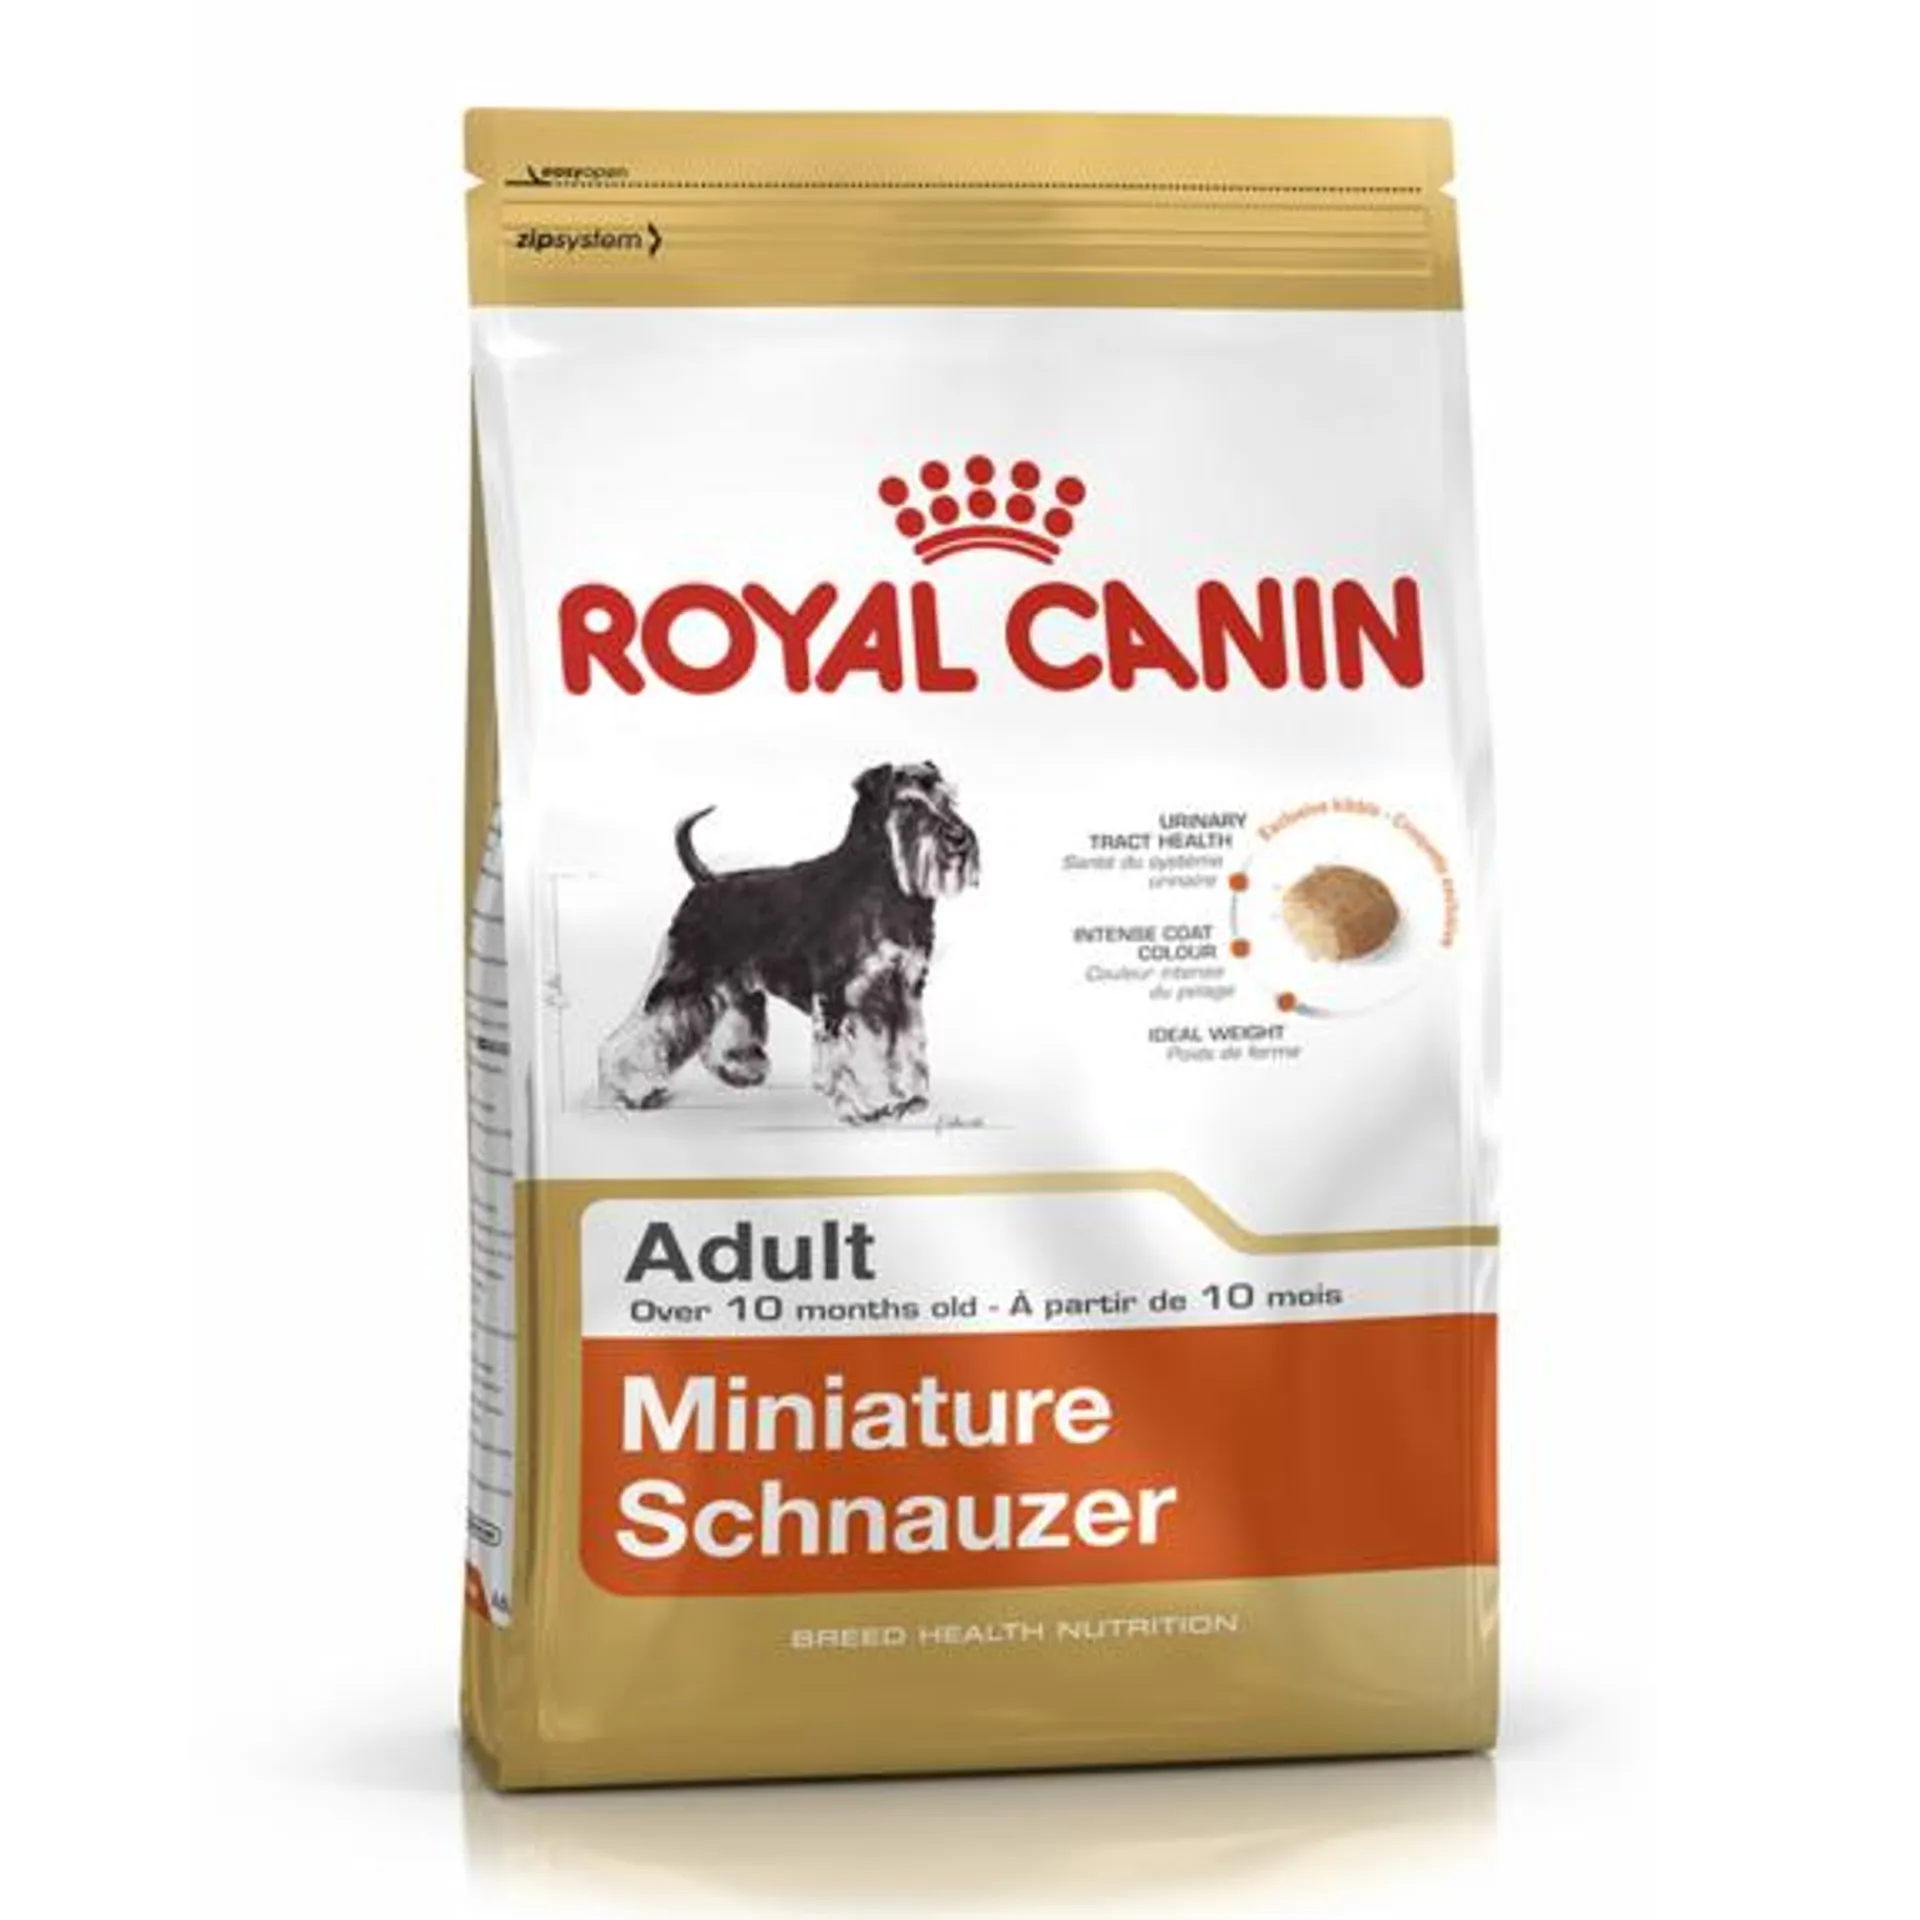 Miniature Schnauzer Adult Royal Canin